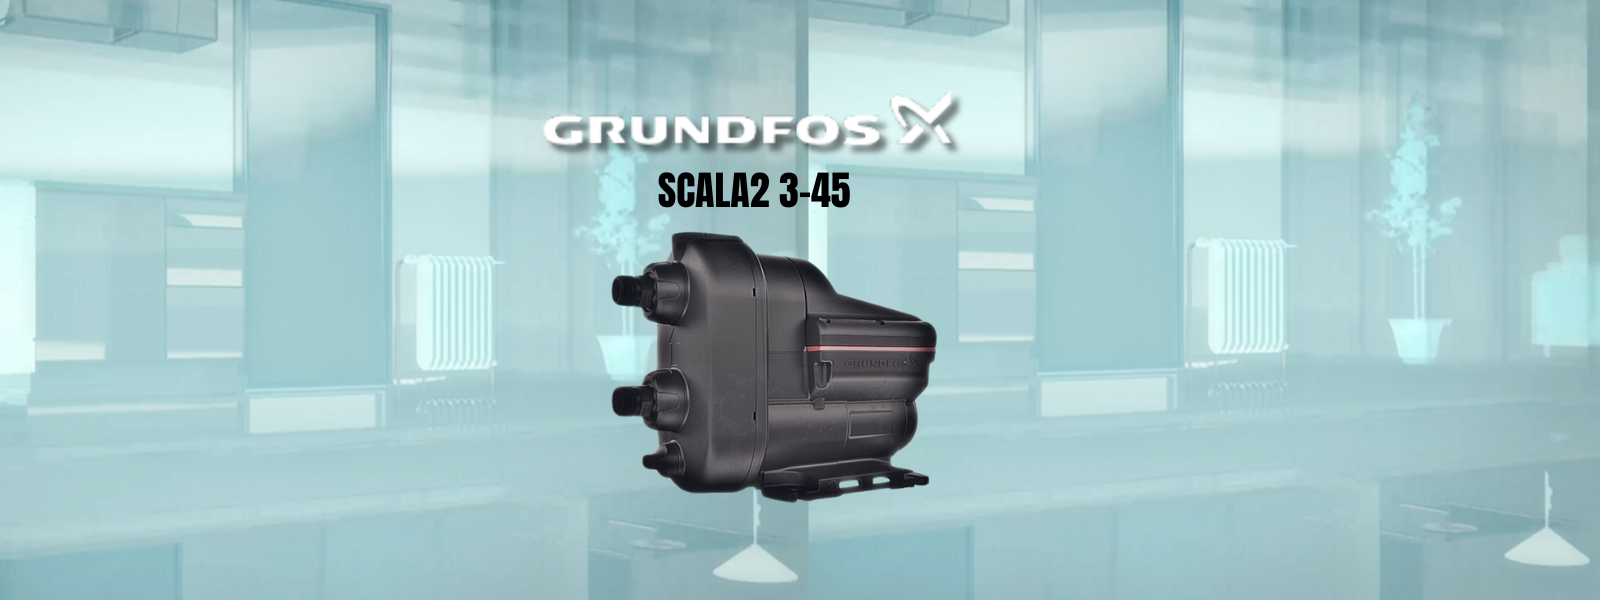 Revolutionizing Domestic Water Pressure: The Grundfos SCALA2 3-45 Pump